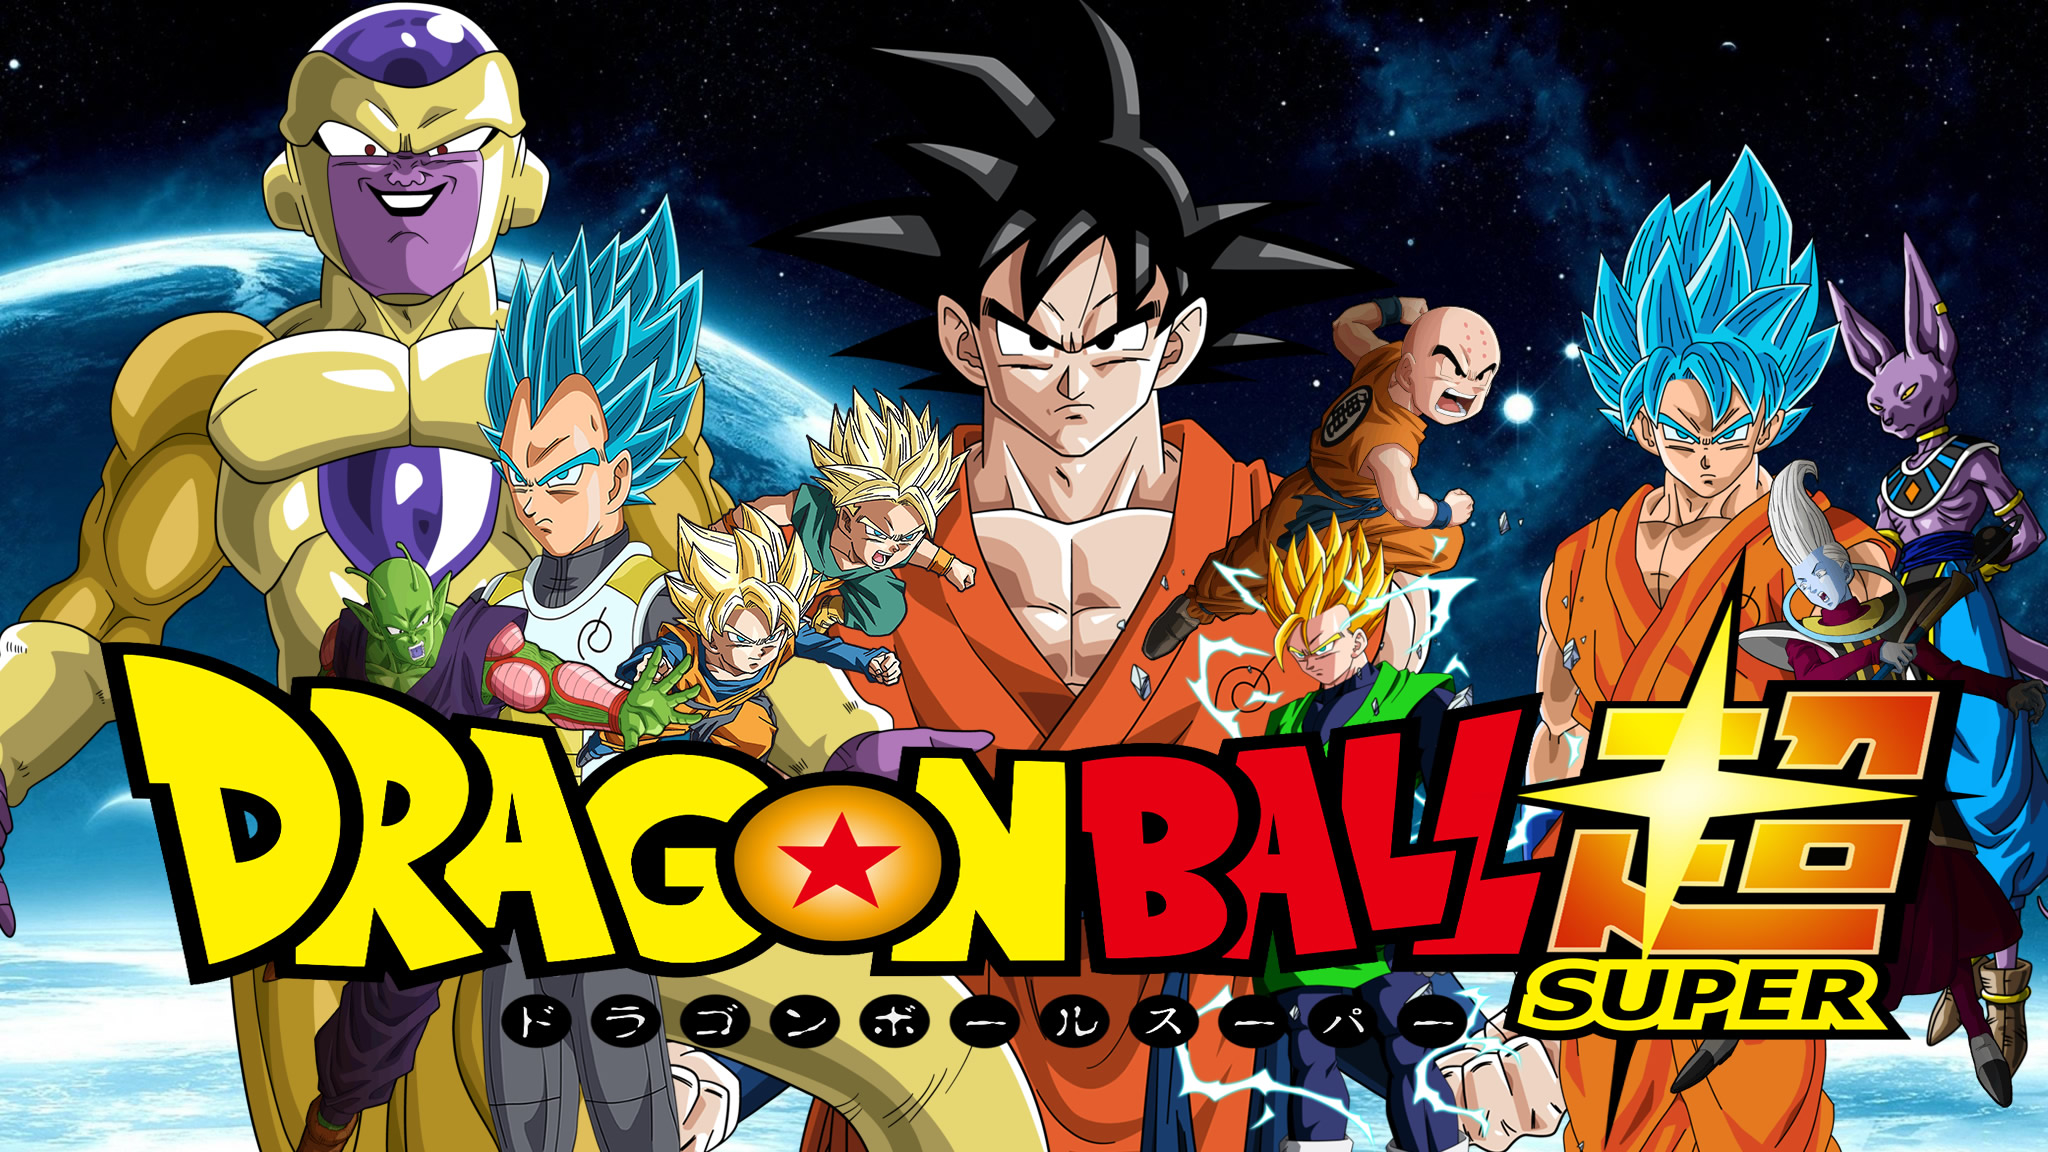 Za Dragon Ball HD Wallpaper Background Image